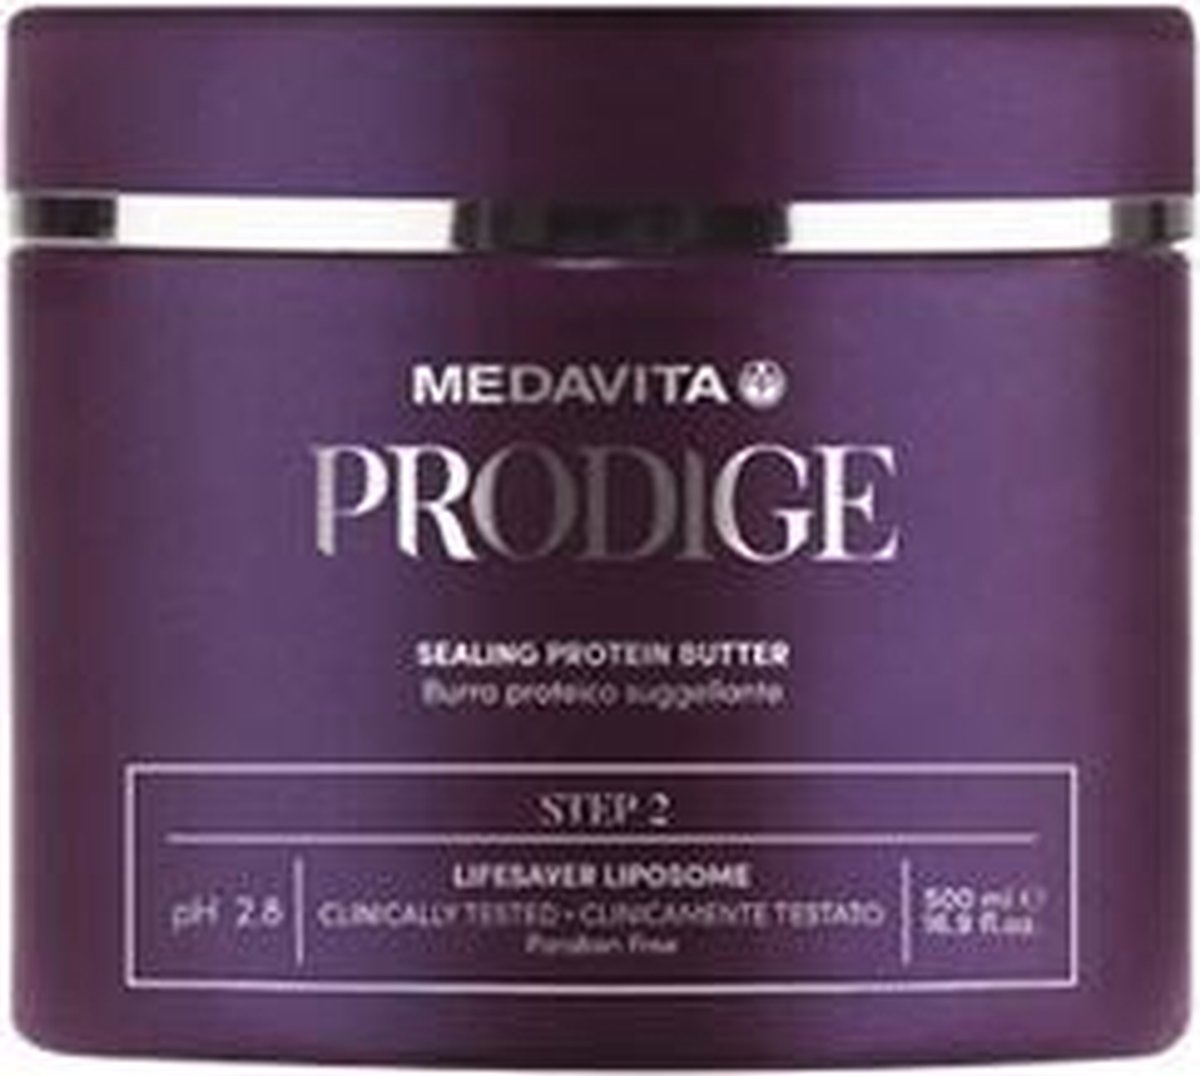 Medavita Prodige Sealing Protein Butter Crème Step 2 500ml